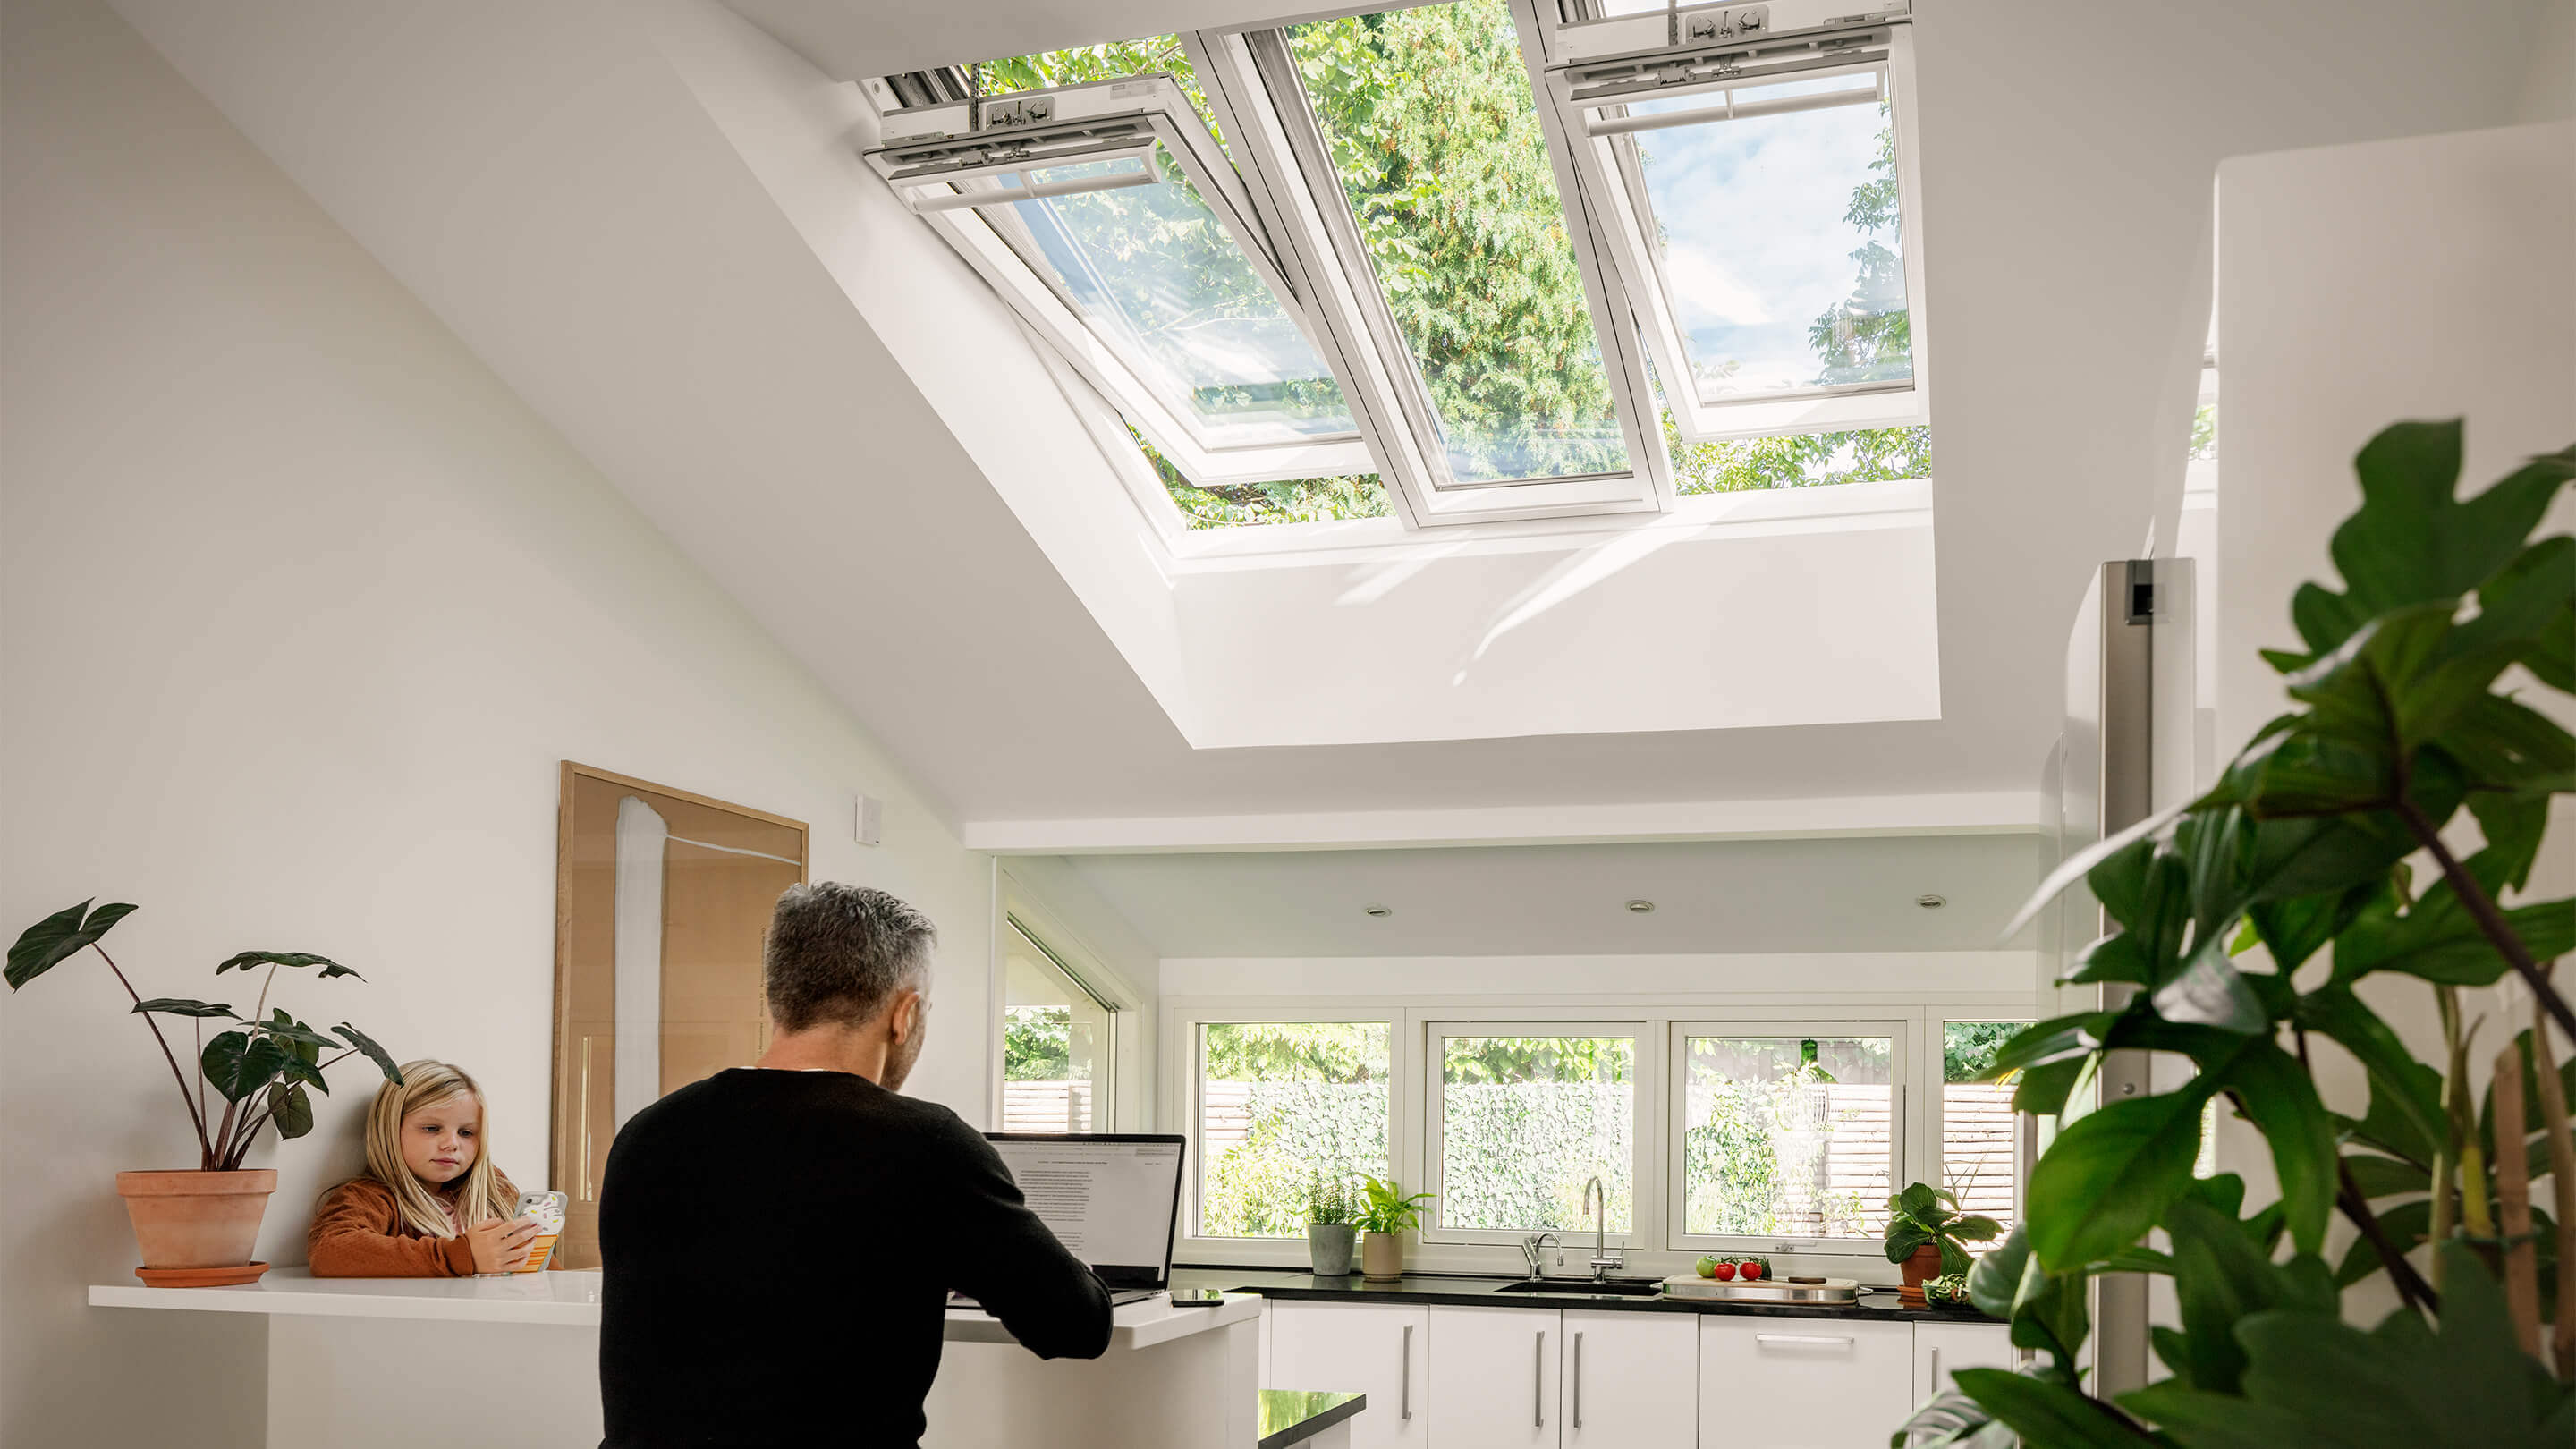 VELUX 3in1 roof window solution in kitchen